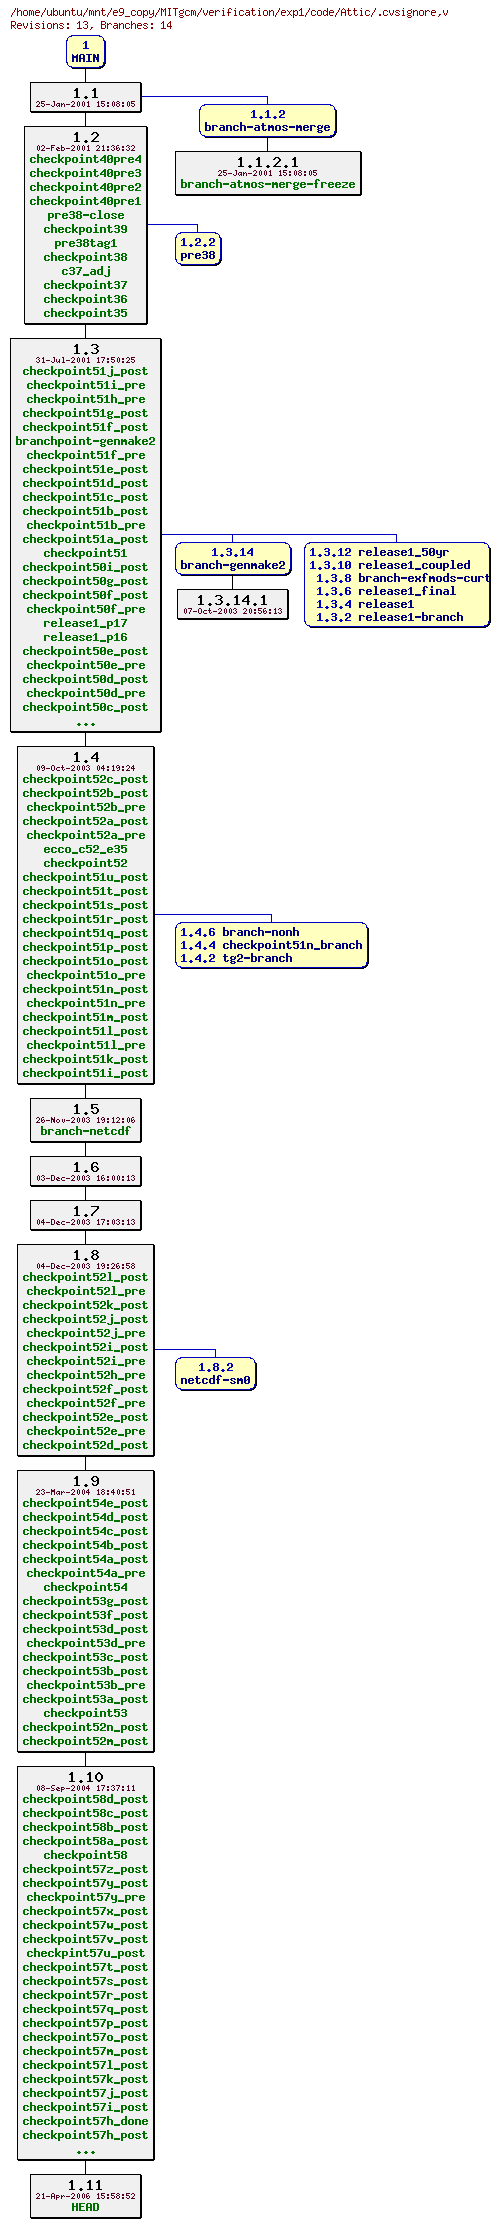 Revisions of MITgcm/verification/exp1/code/.cvsignore